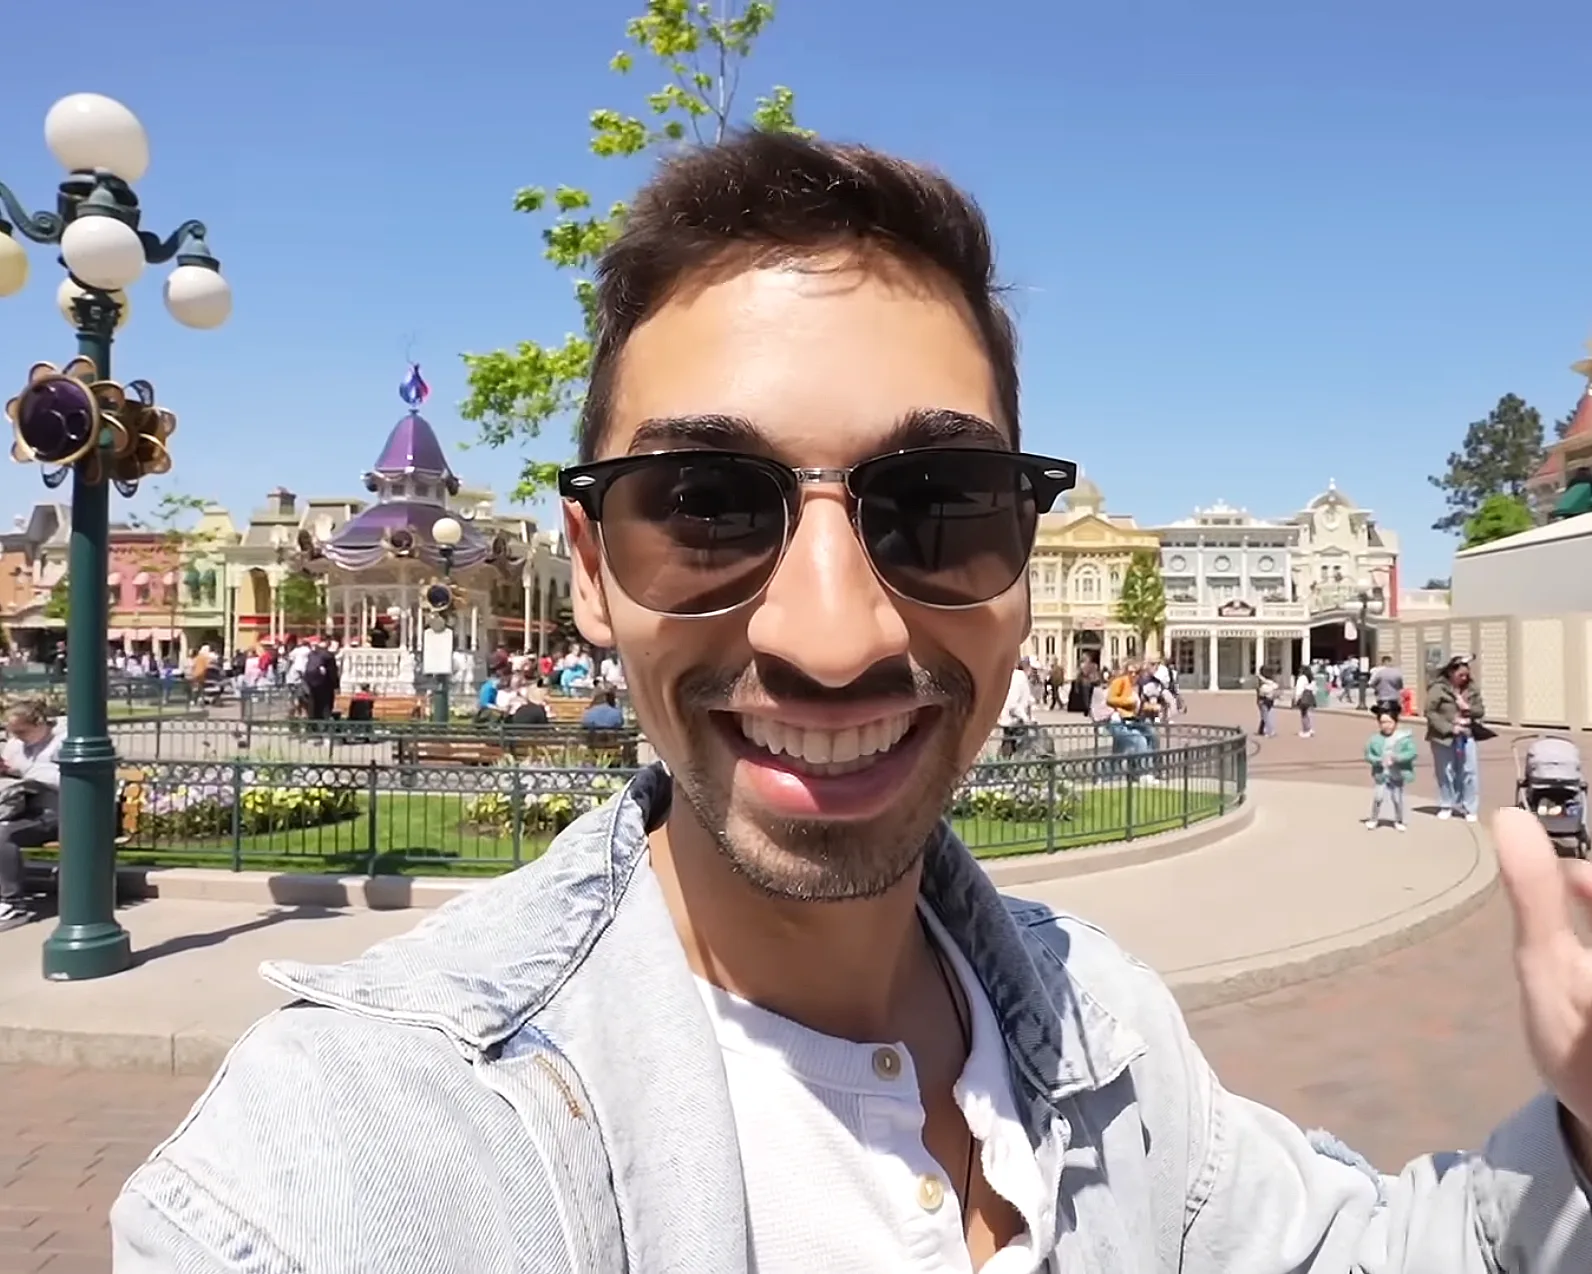 JoJo’s World: Impressions of Disneyland Paris